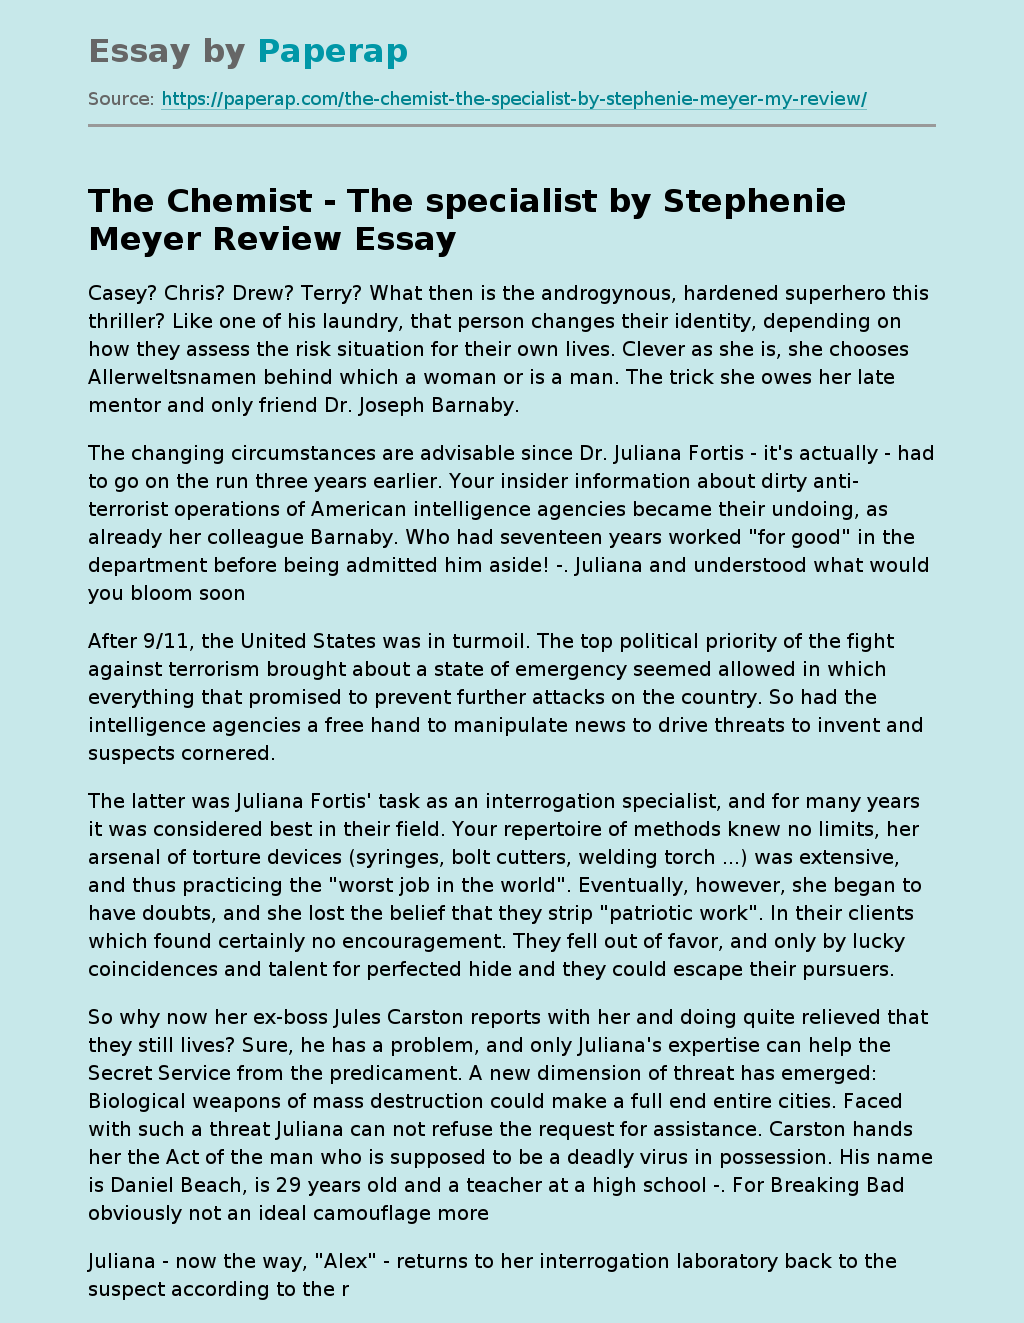 The Chemist - The specialist by Stephenie Meyer Review